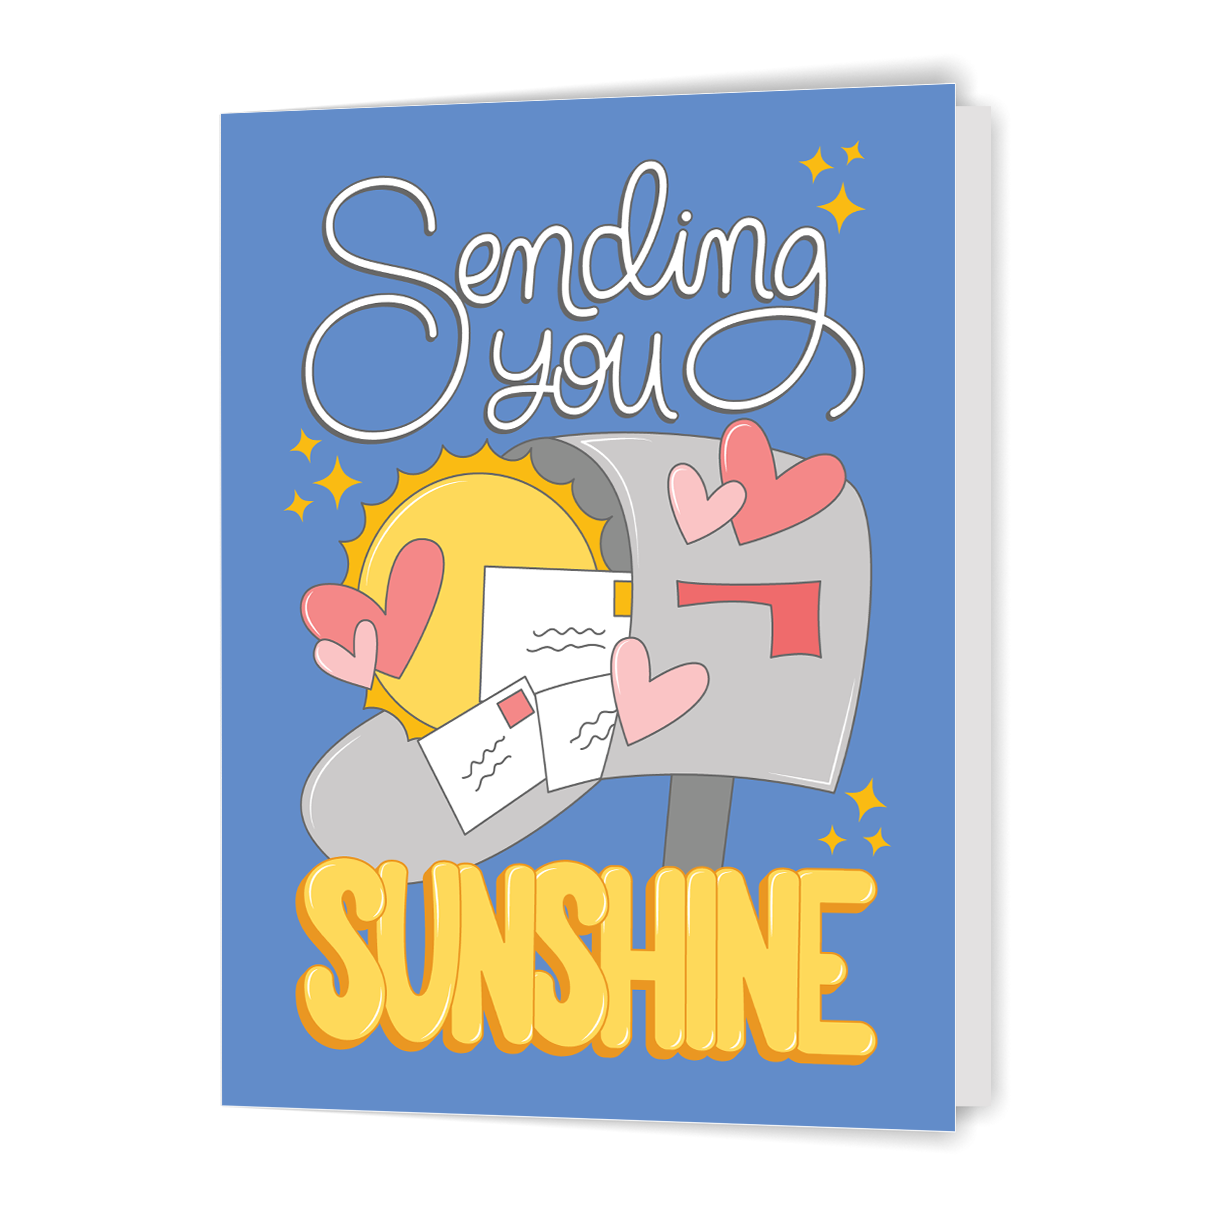 Sending You Sunshine - Greeting Card